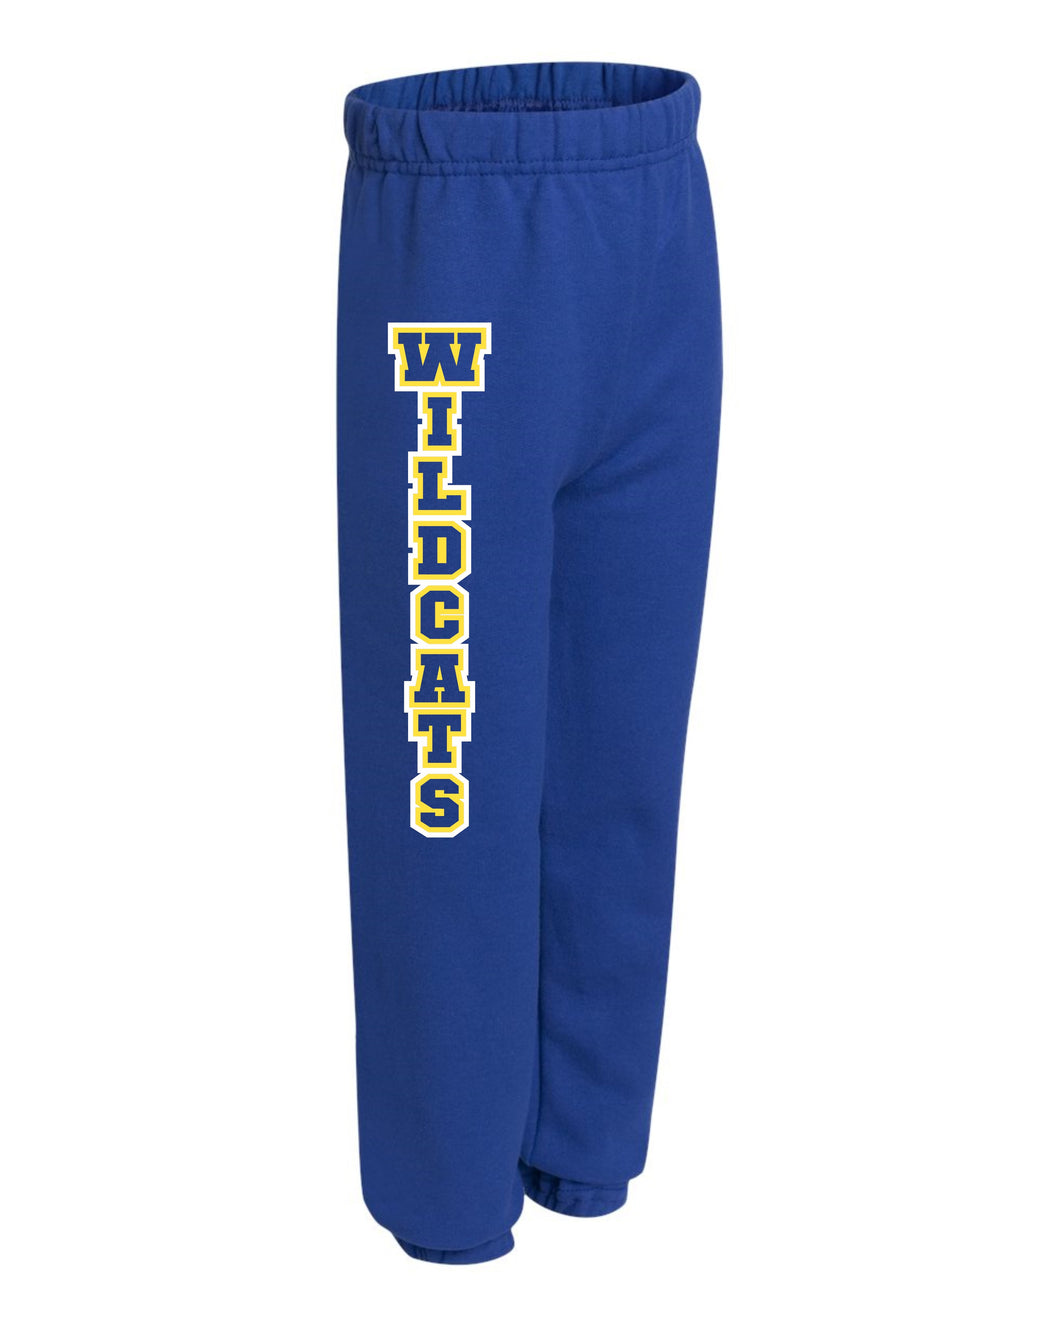 Washington Elementary School YOUTH Jogger style Sweat pants 973BR